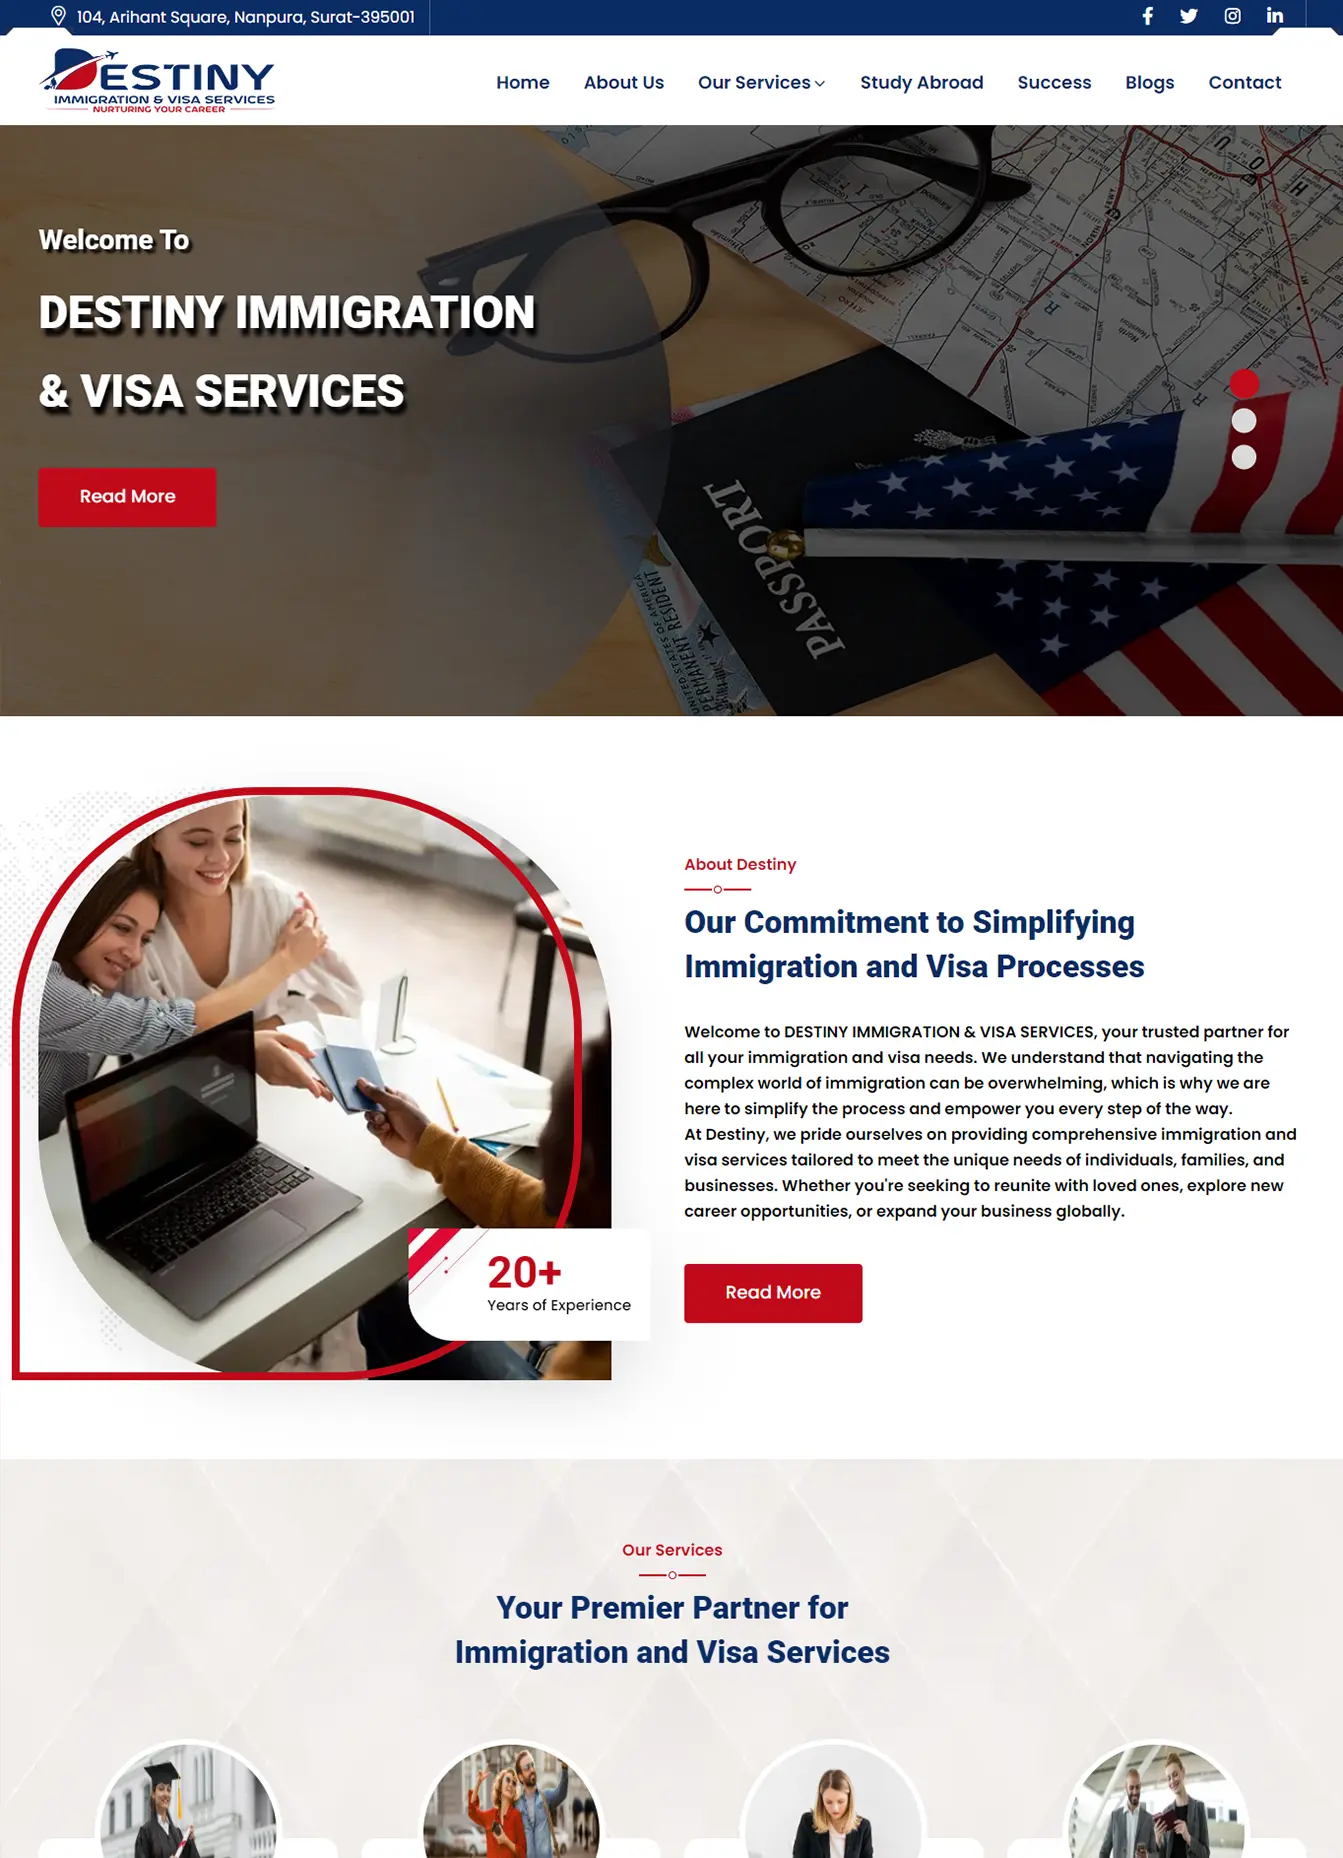 Destiny Immigration & Visa Services